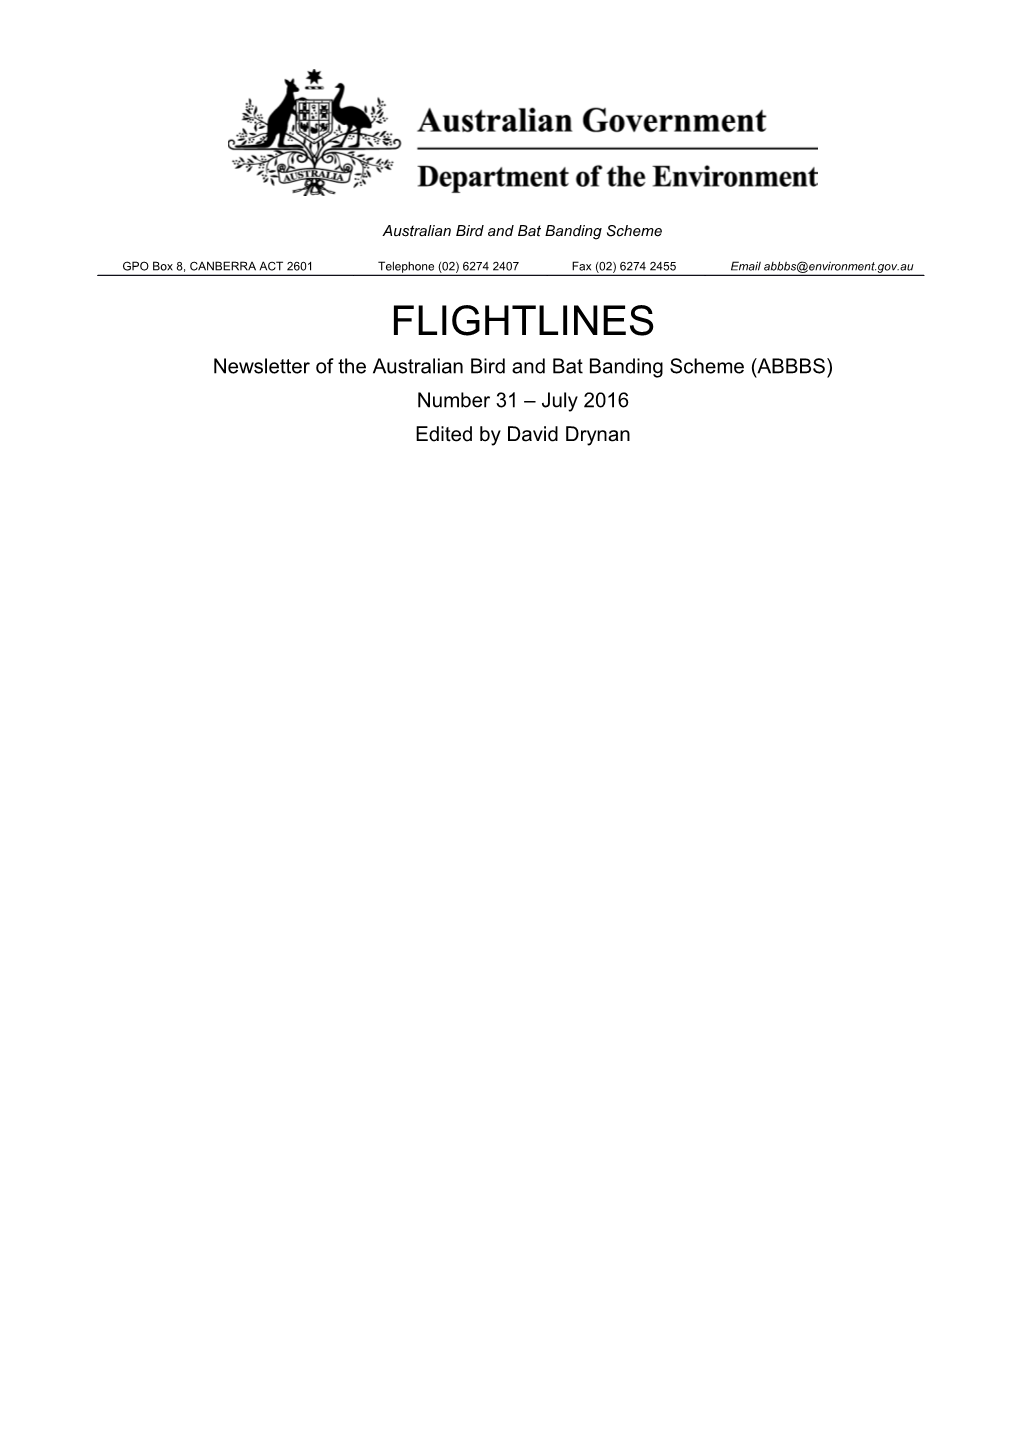 Flightlines: Newsletter of the Australian Bird and Bat Banding Scheme (ABBBS) - Number